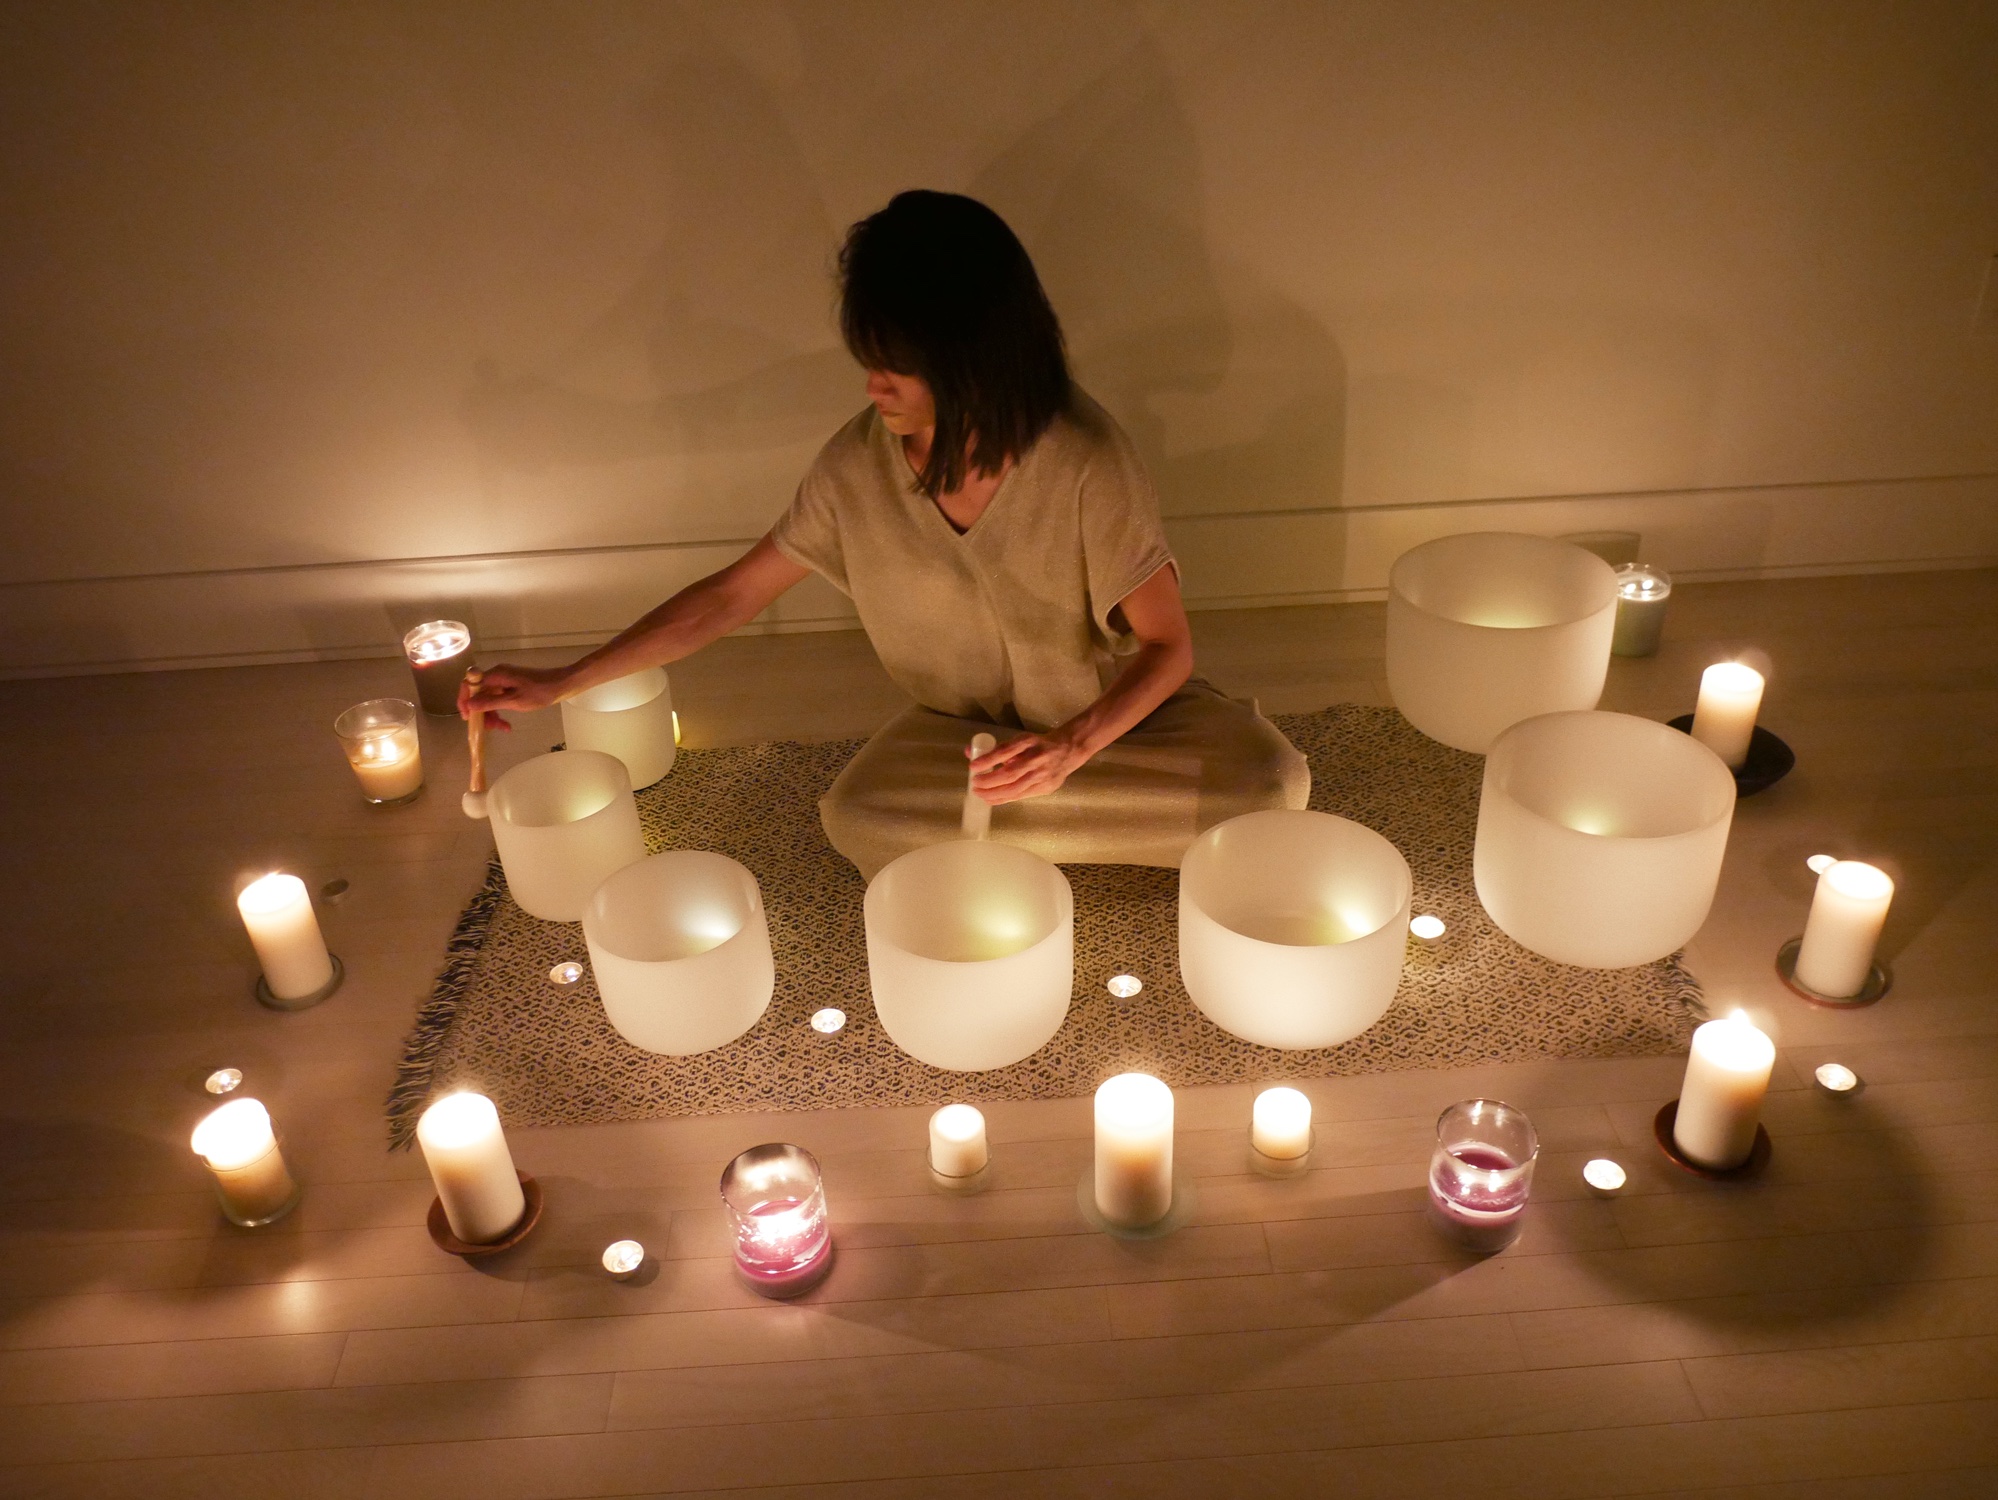 Candlelight Sound Bath